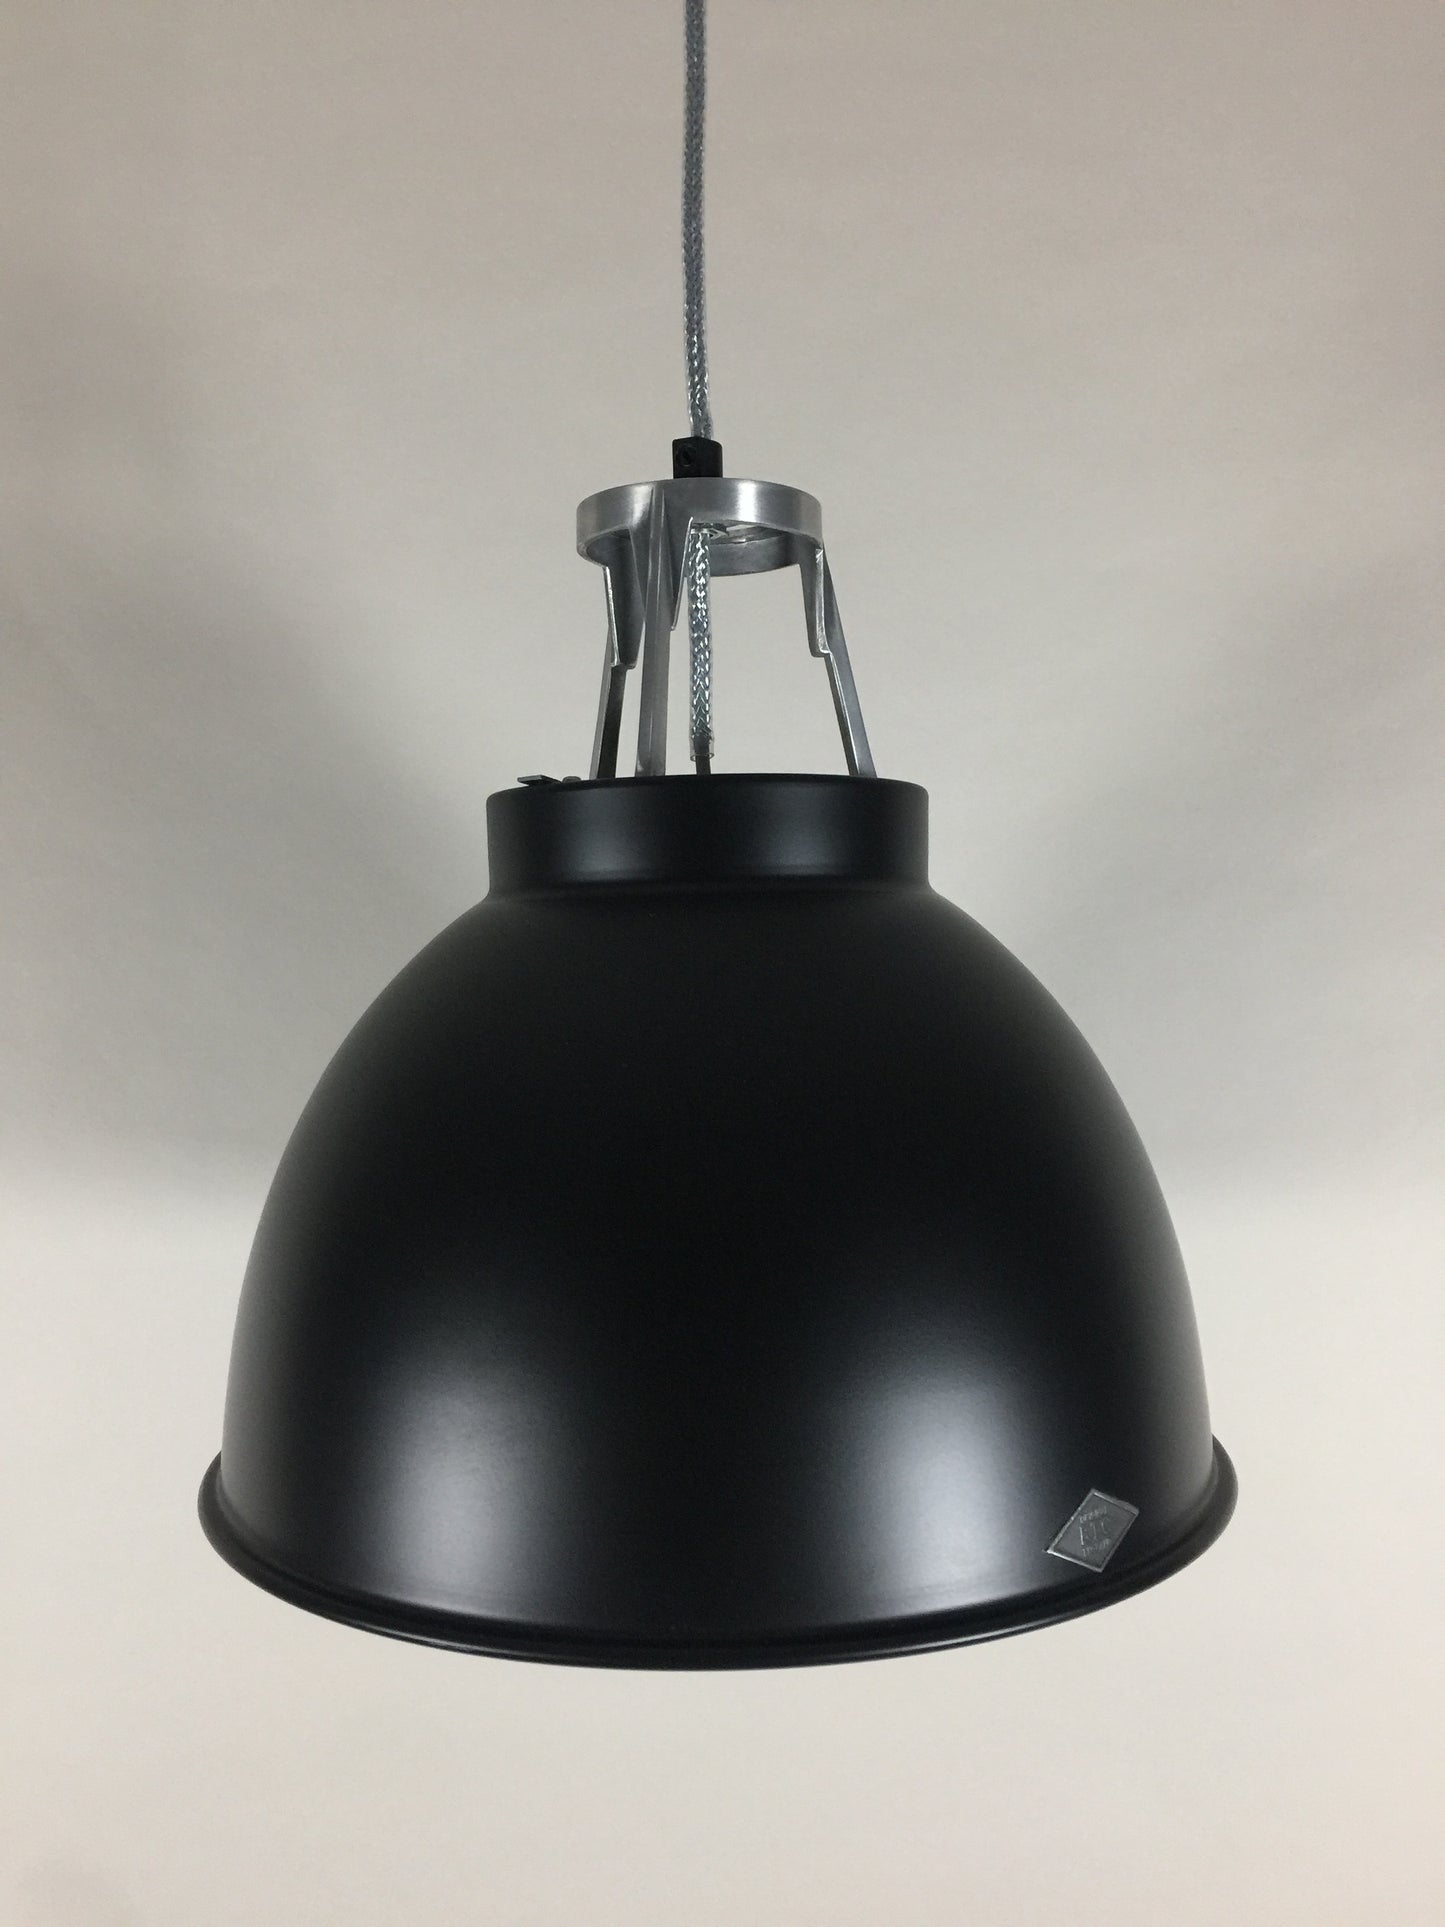 Original BTC lampa - Titan i svart